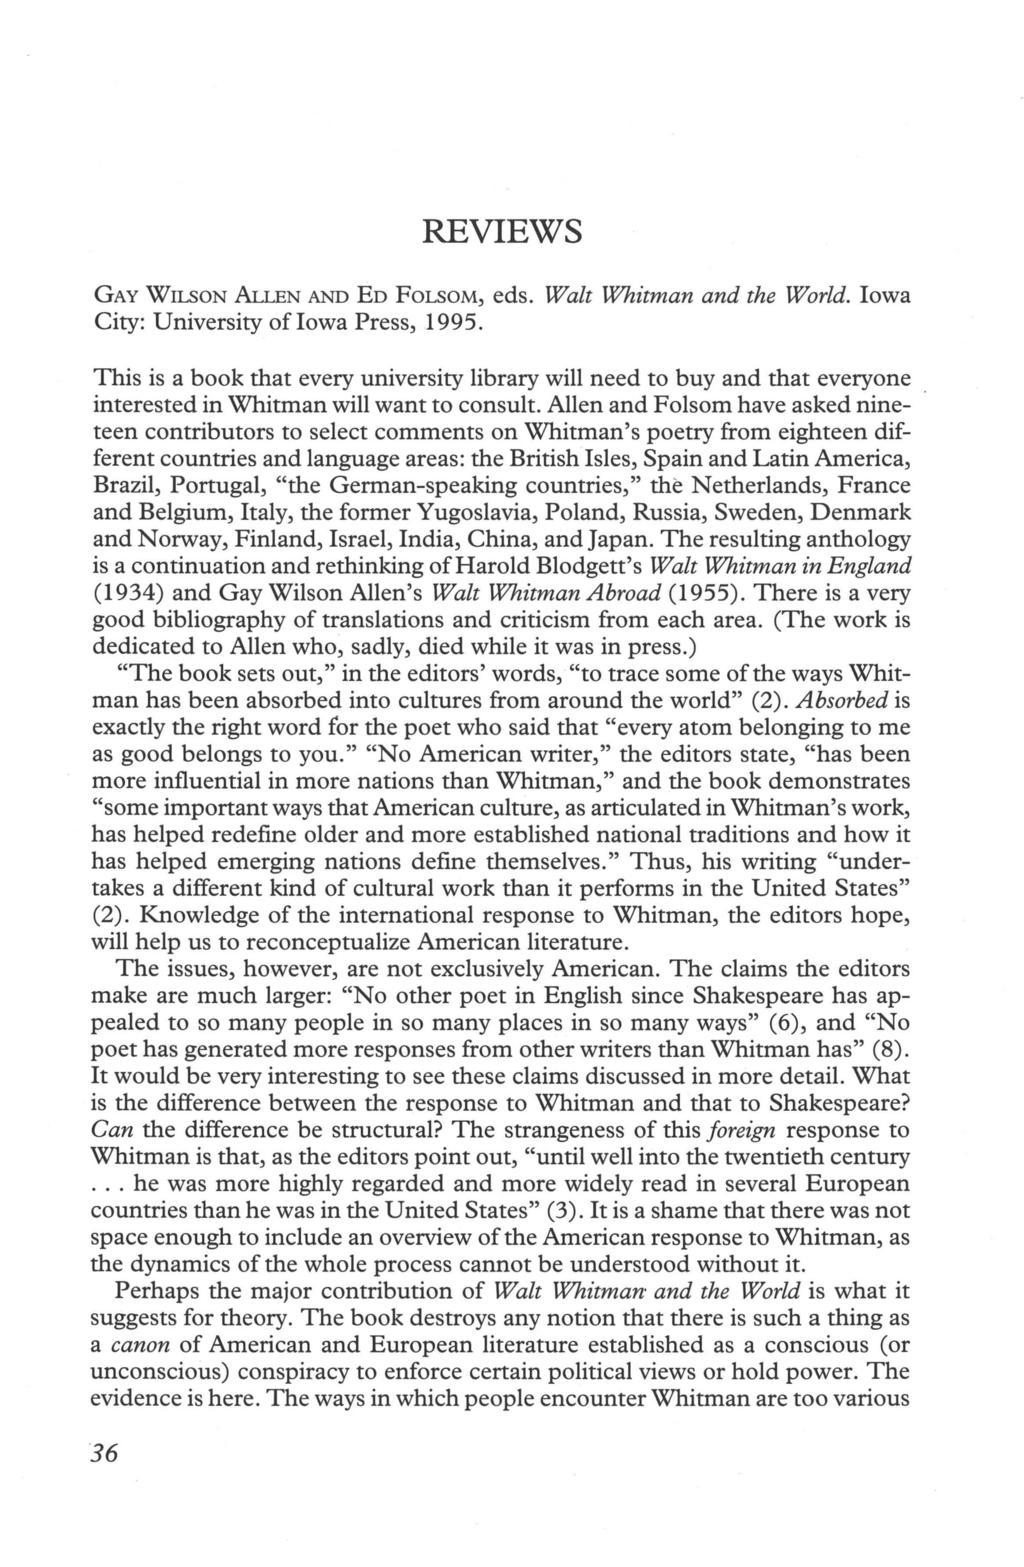 REVIEWS GAY WILSON ALLEN AND ED FOLSOM, eds. Walt Whitman and the World. Iowa City: University of Iowa Press, 1995.